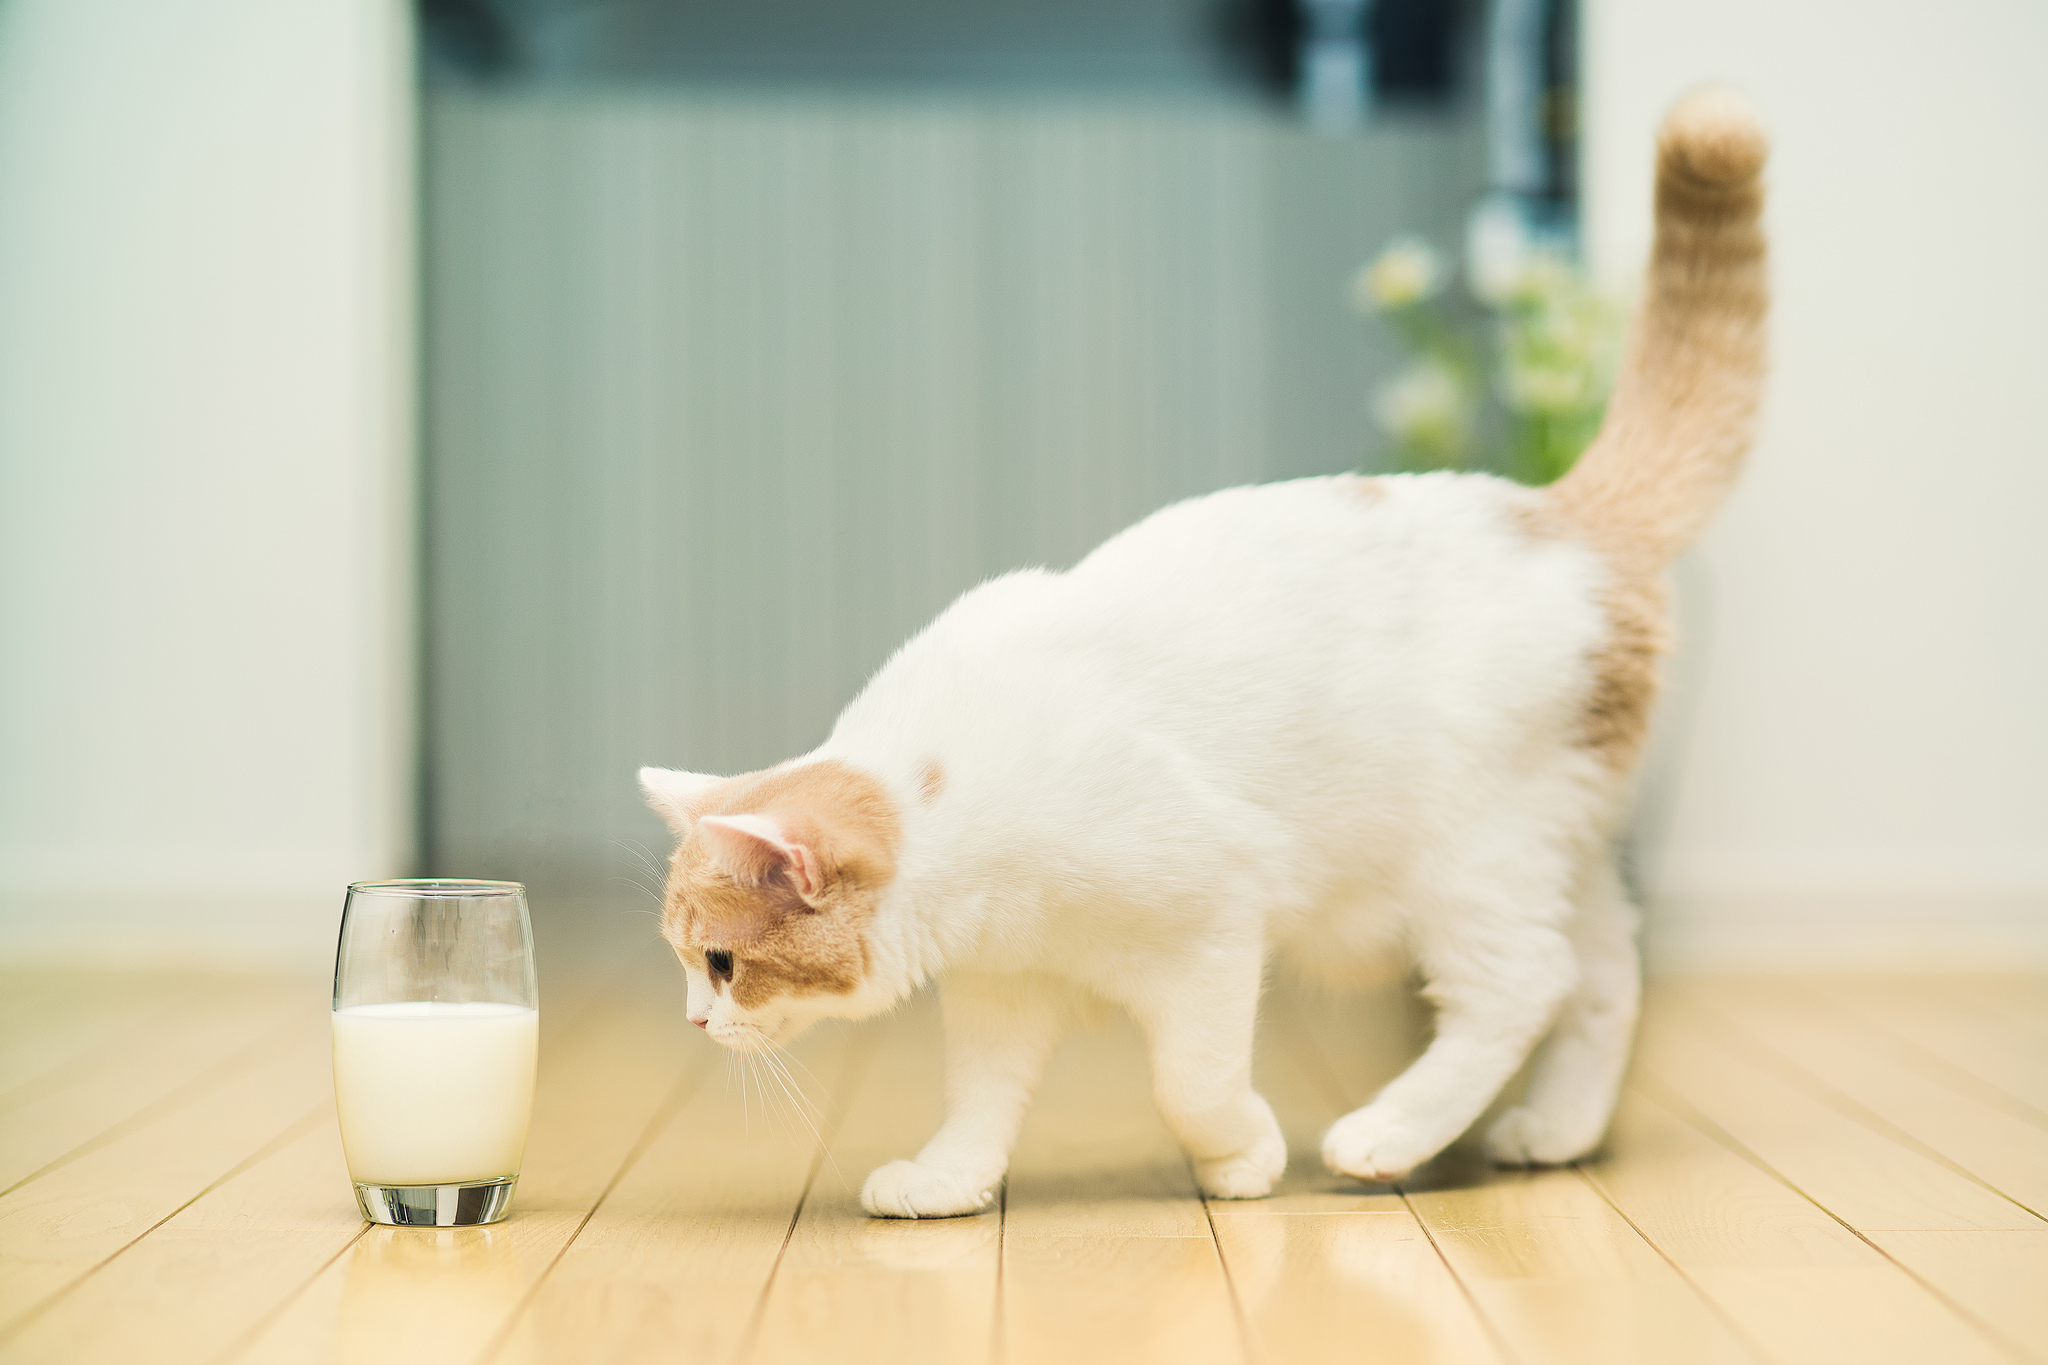 276390 descargar imagen animales, gato, leche, gatos: fondos de pantalla y protectores de pantalla gratis